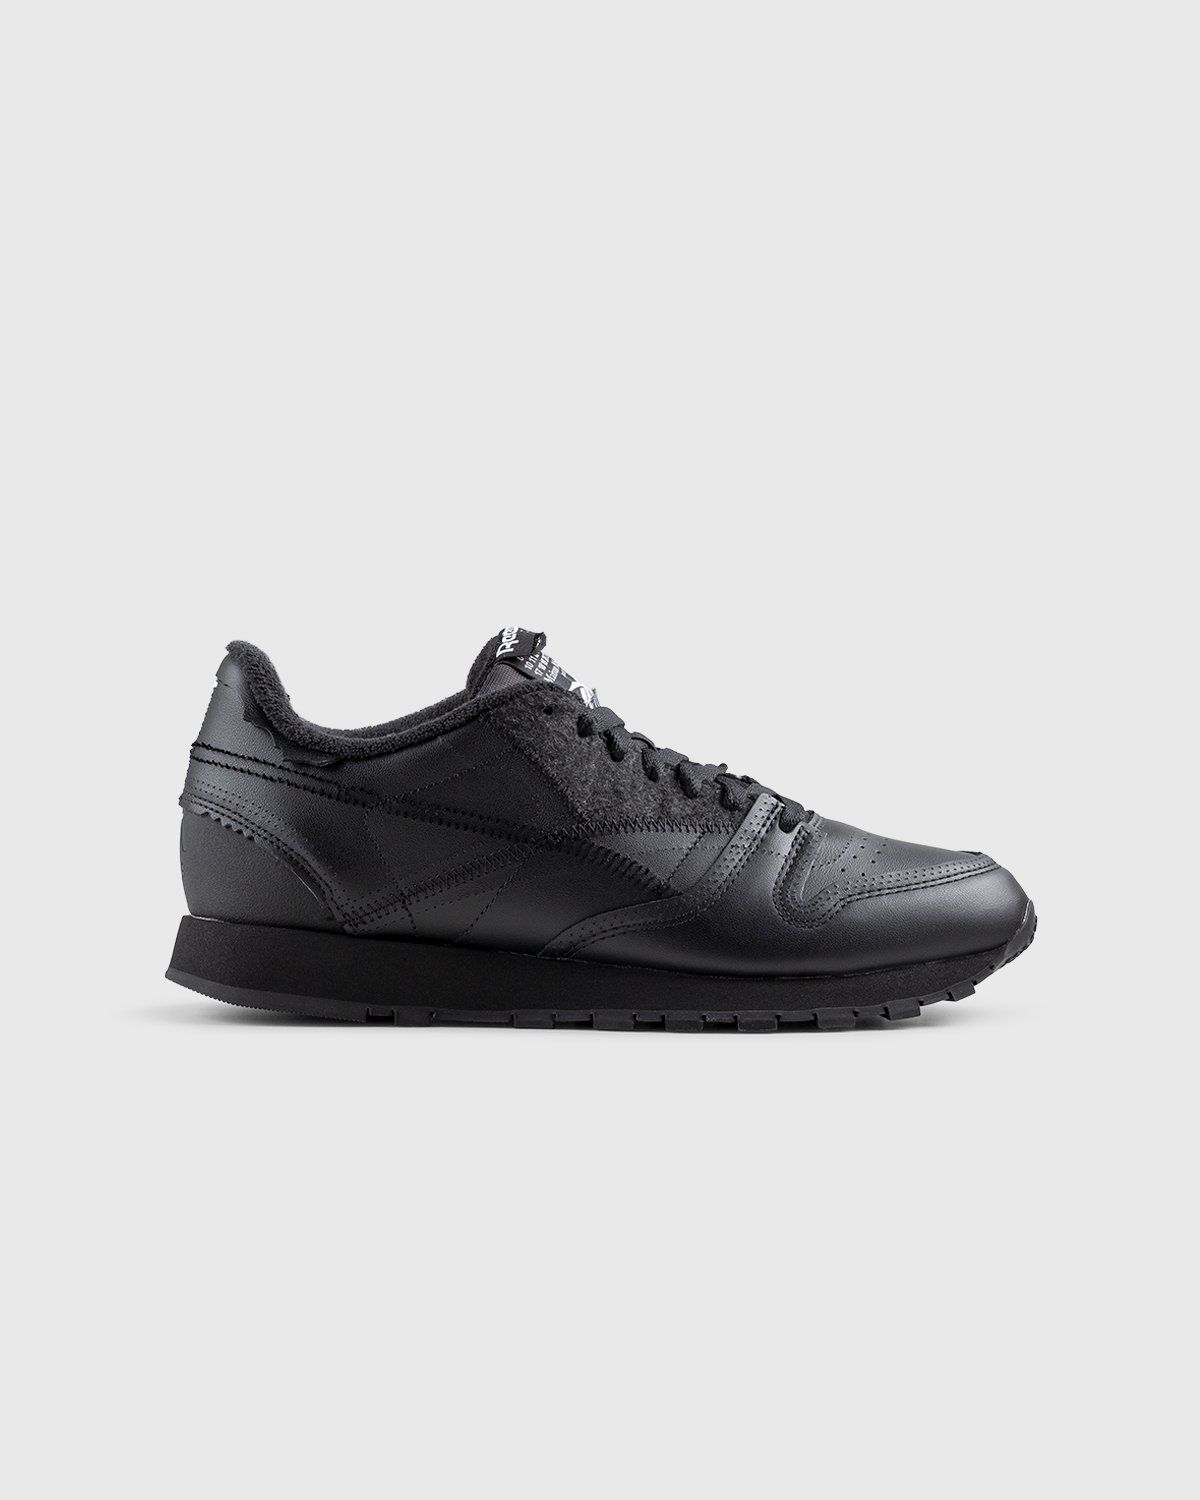 Maison Margiela x Reebok – Classic Leather Memory Of Black/Footwear White/Black - Low Top Sneakers - Black - Image 1